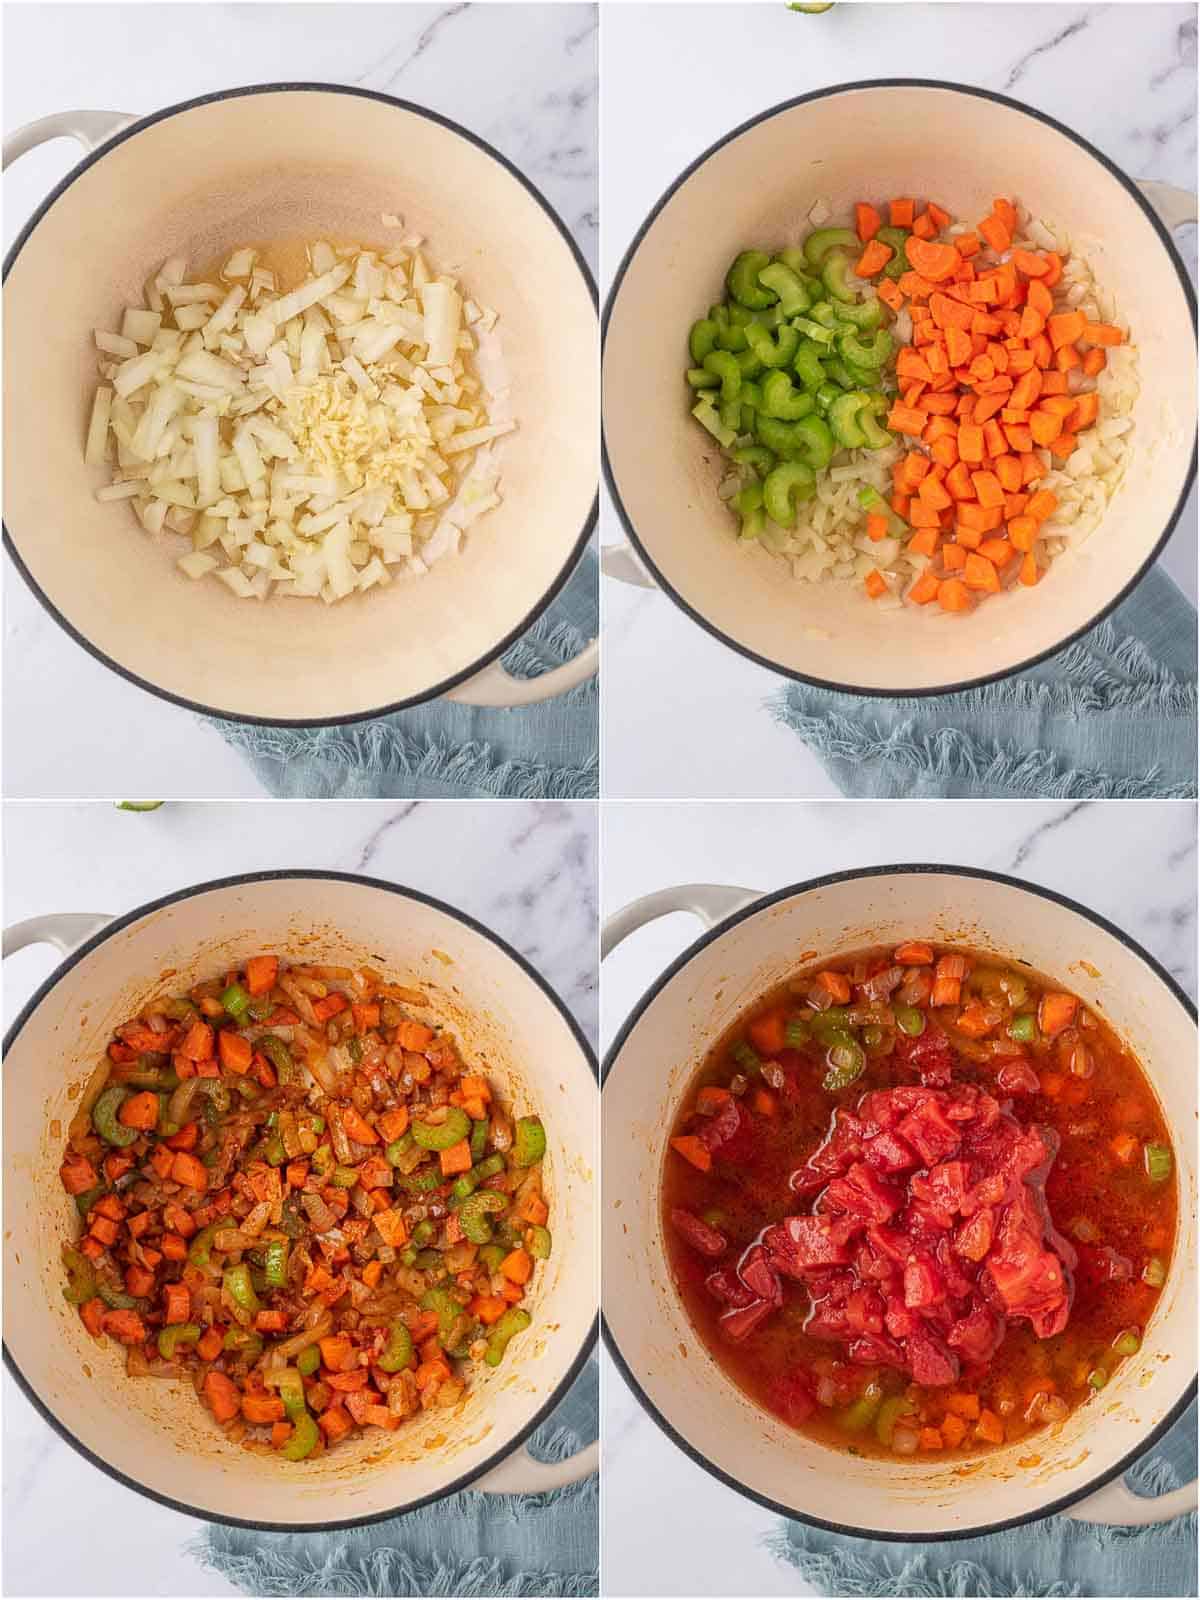 Process shots of veggies cooking for vegan chili.